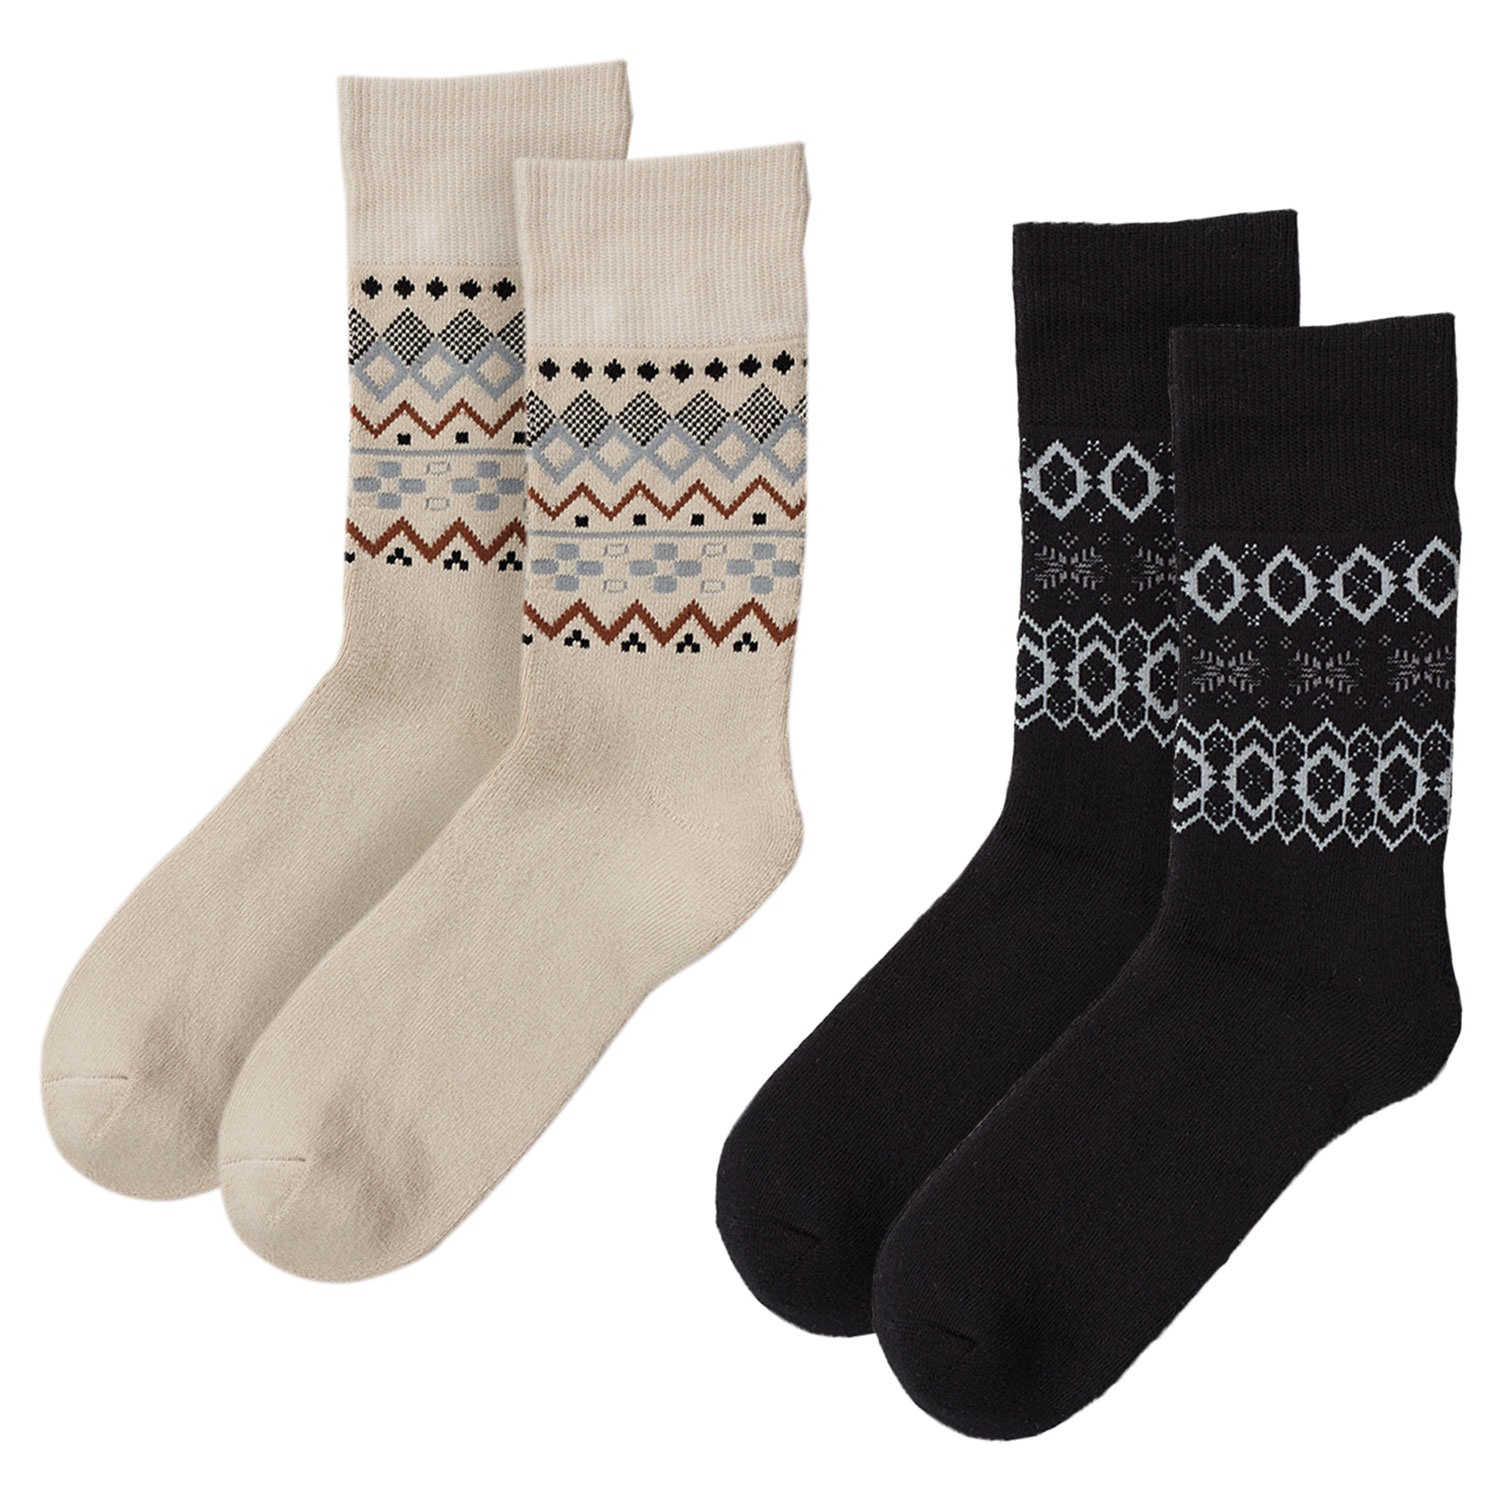 LYCRA Damen und Herren Casual-Mountain-Socken 2 Paar